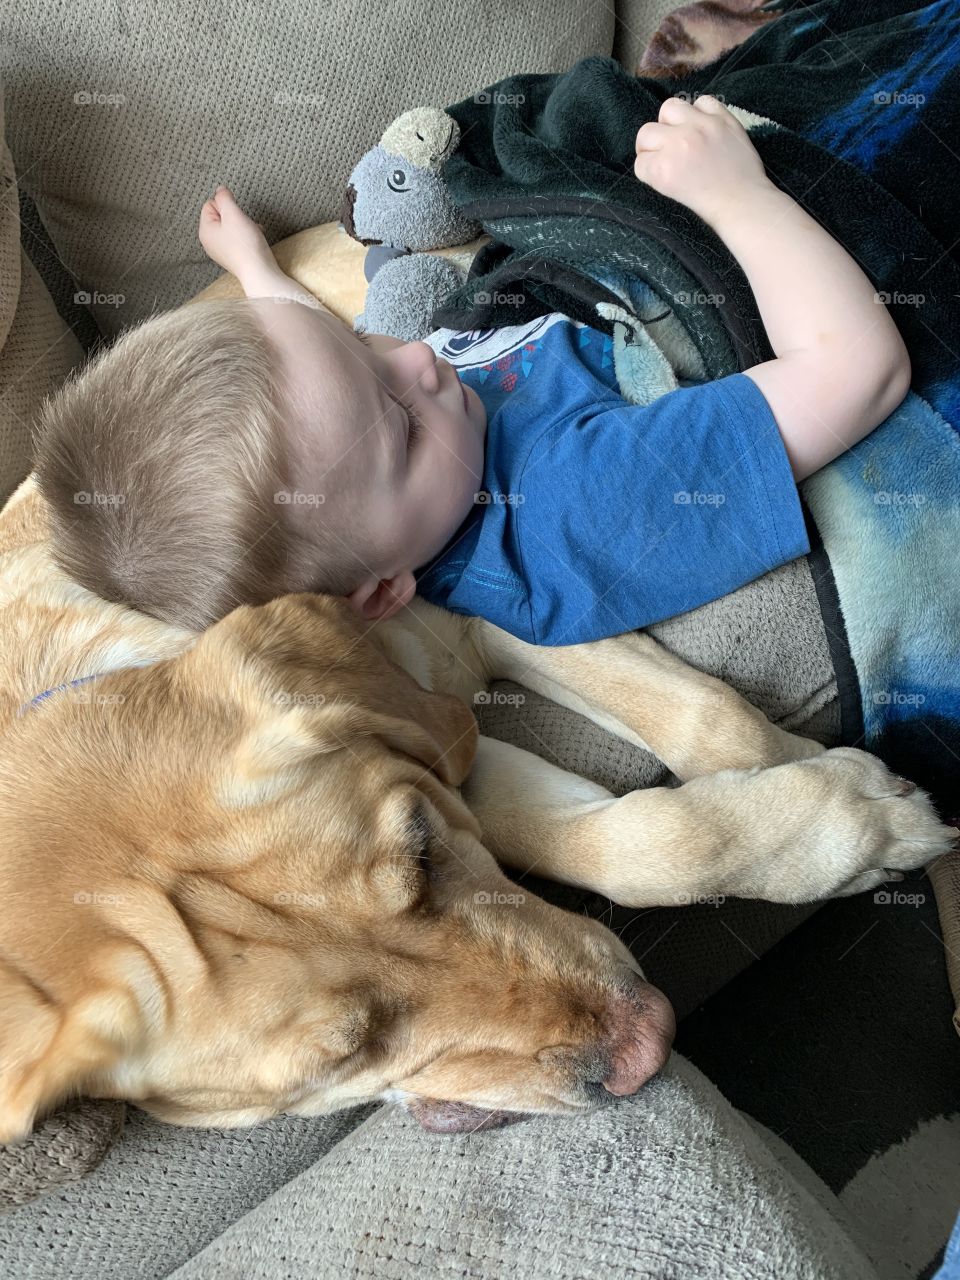 A boy and dog